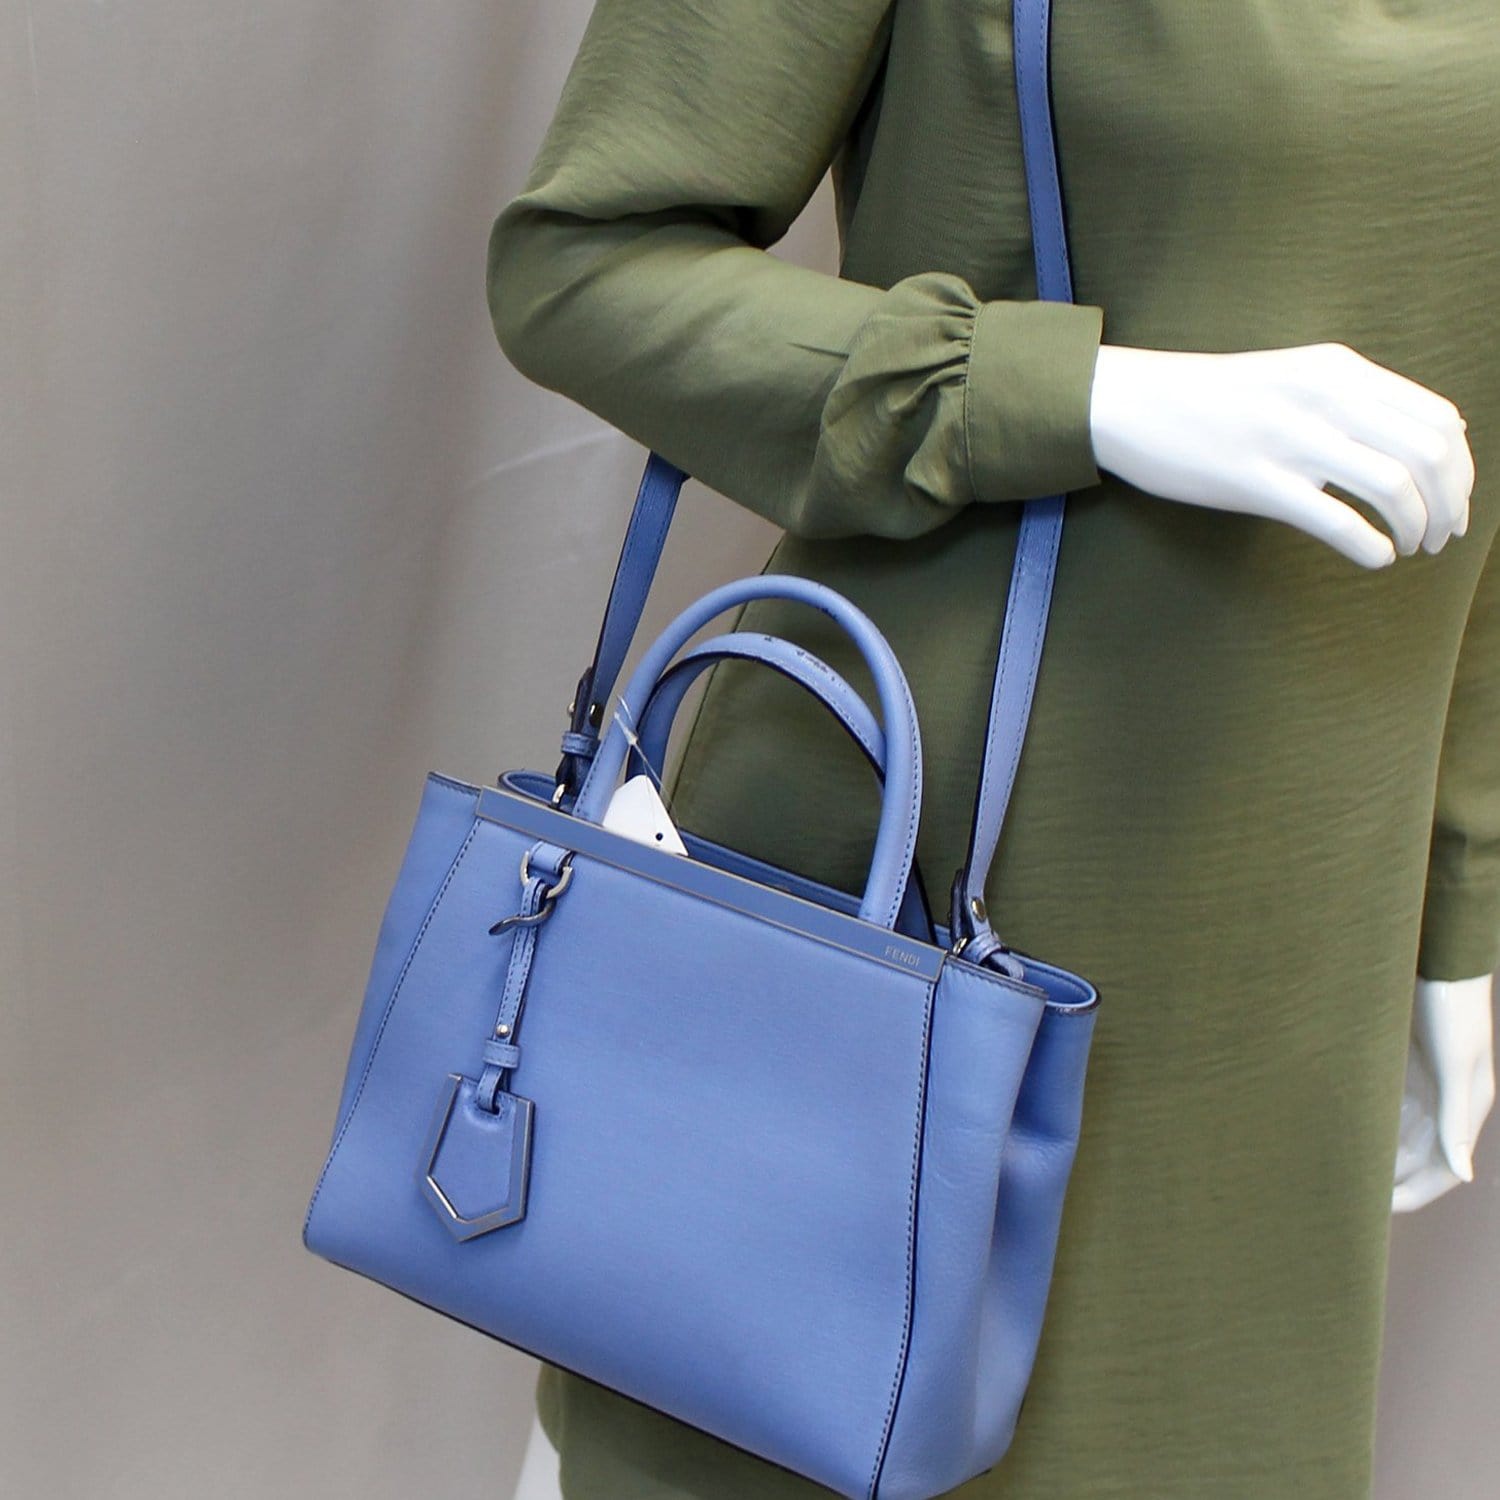 Blue Leather Fendi Roma Handbags, 0.5, Size: 8/9